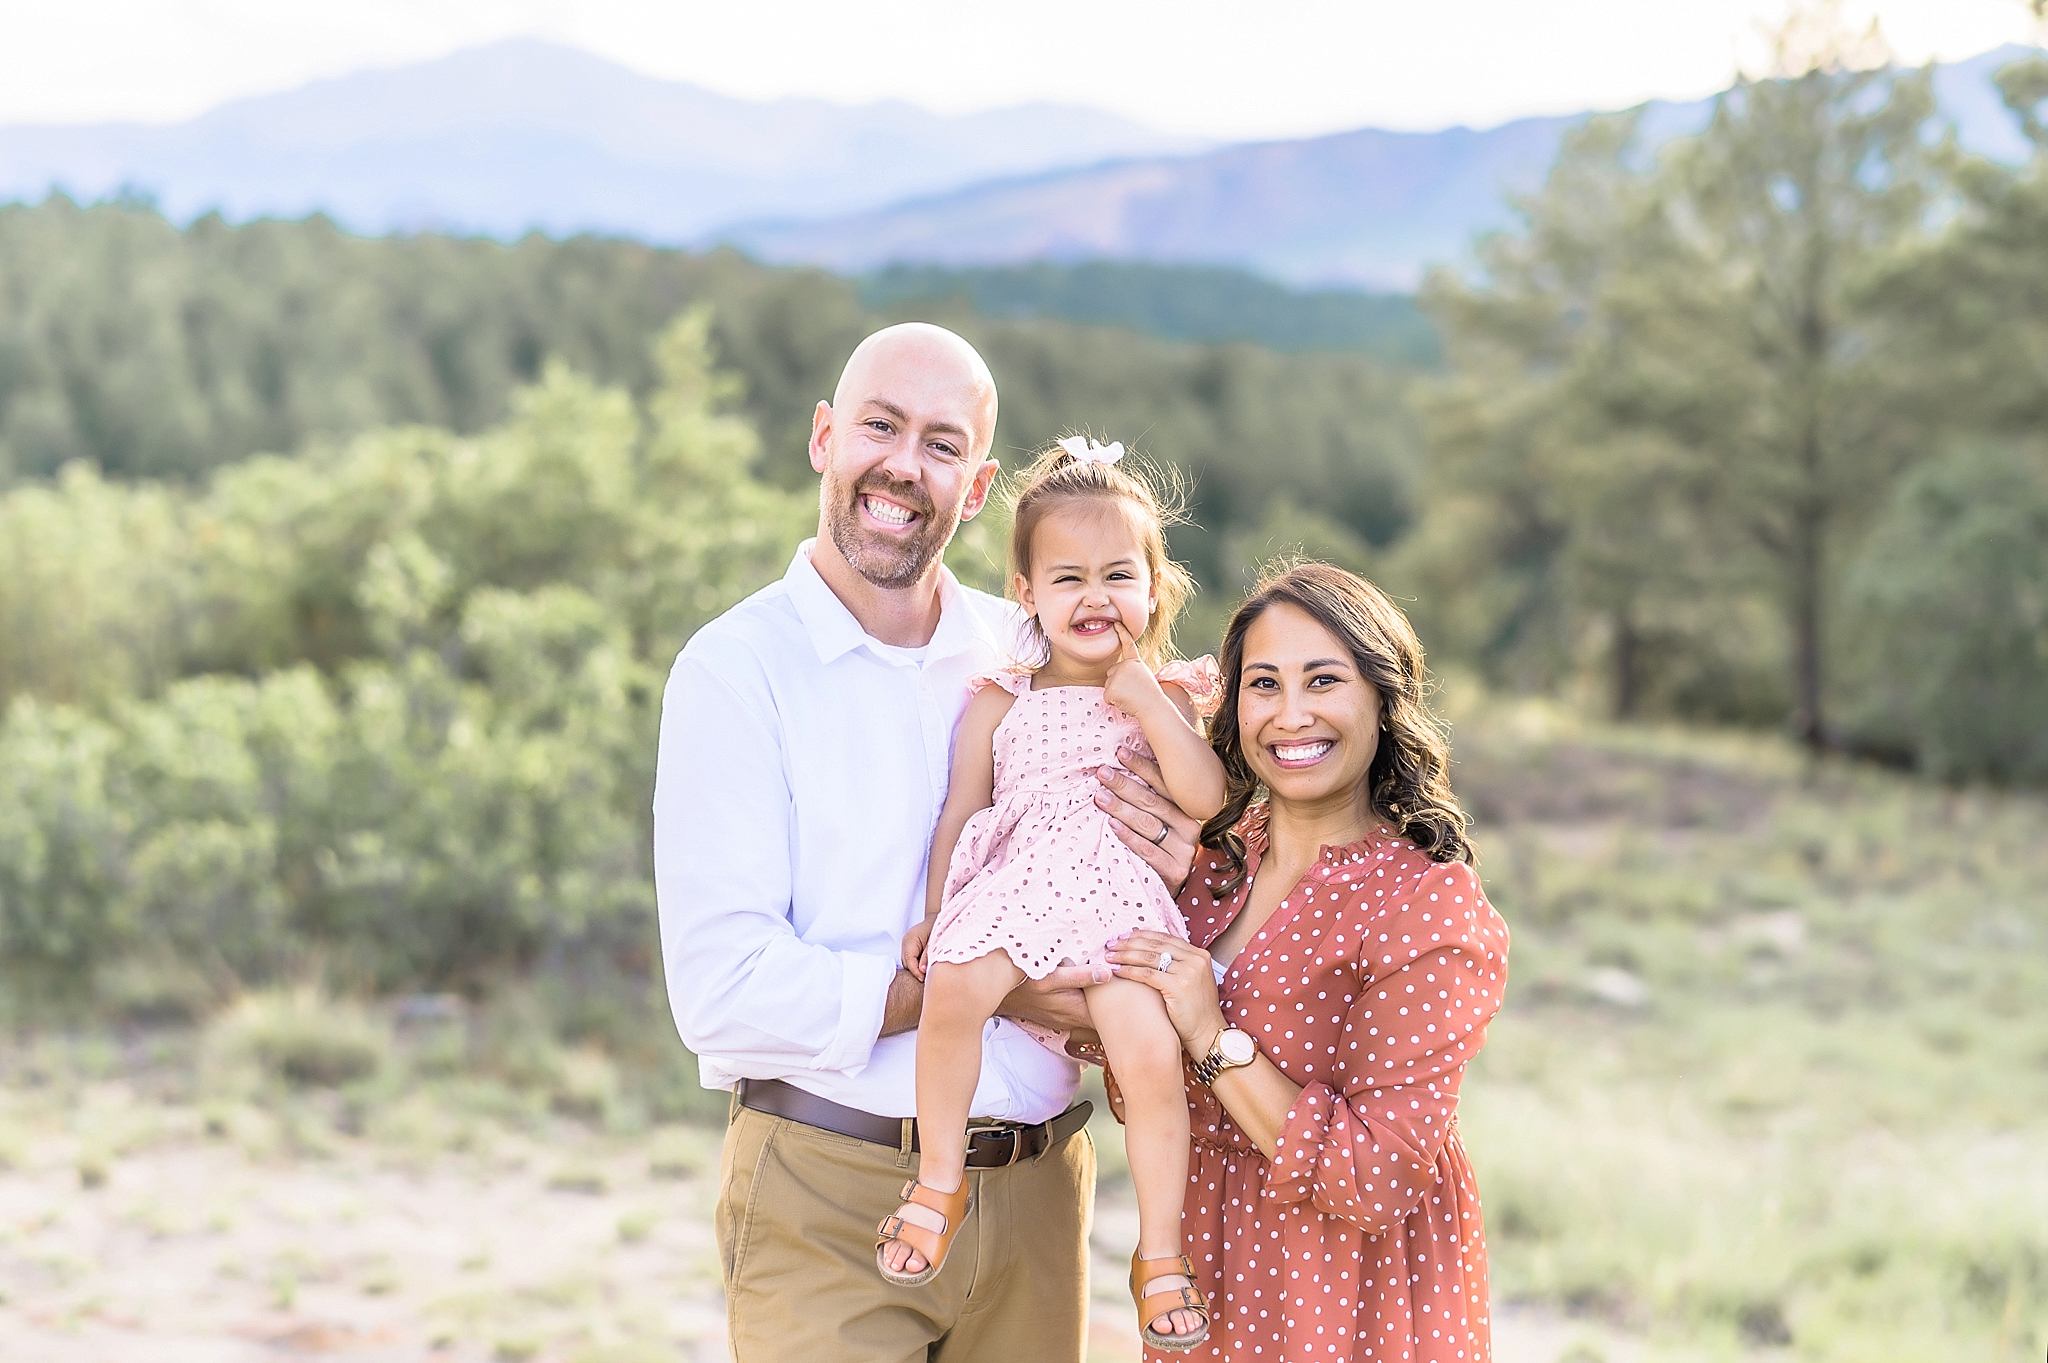 The Franks | Ute Valley Park, Colorado Family Photographer